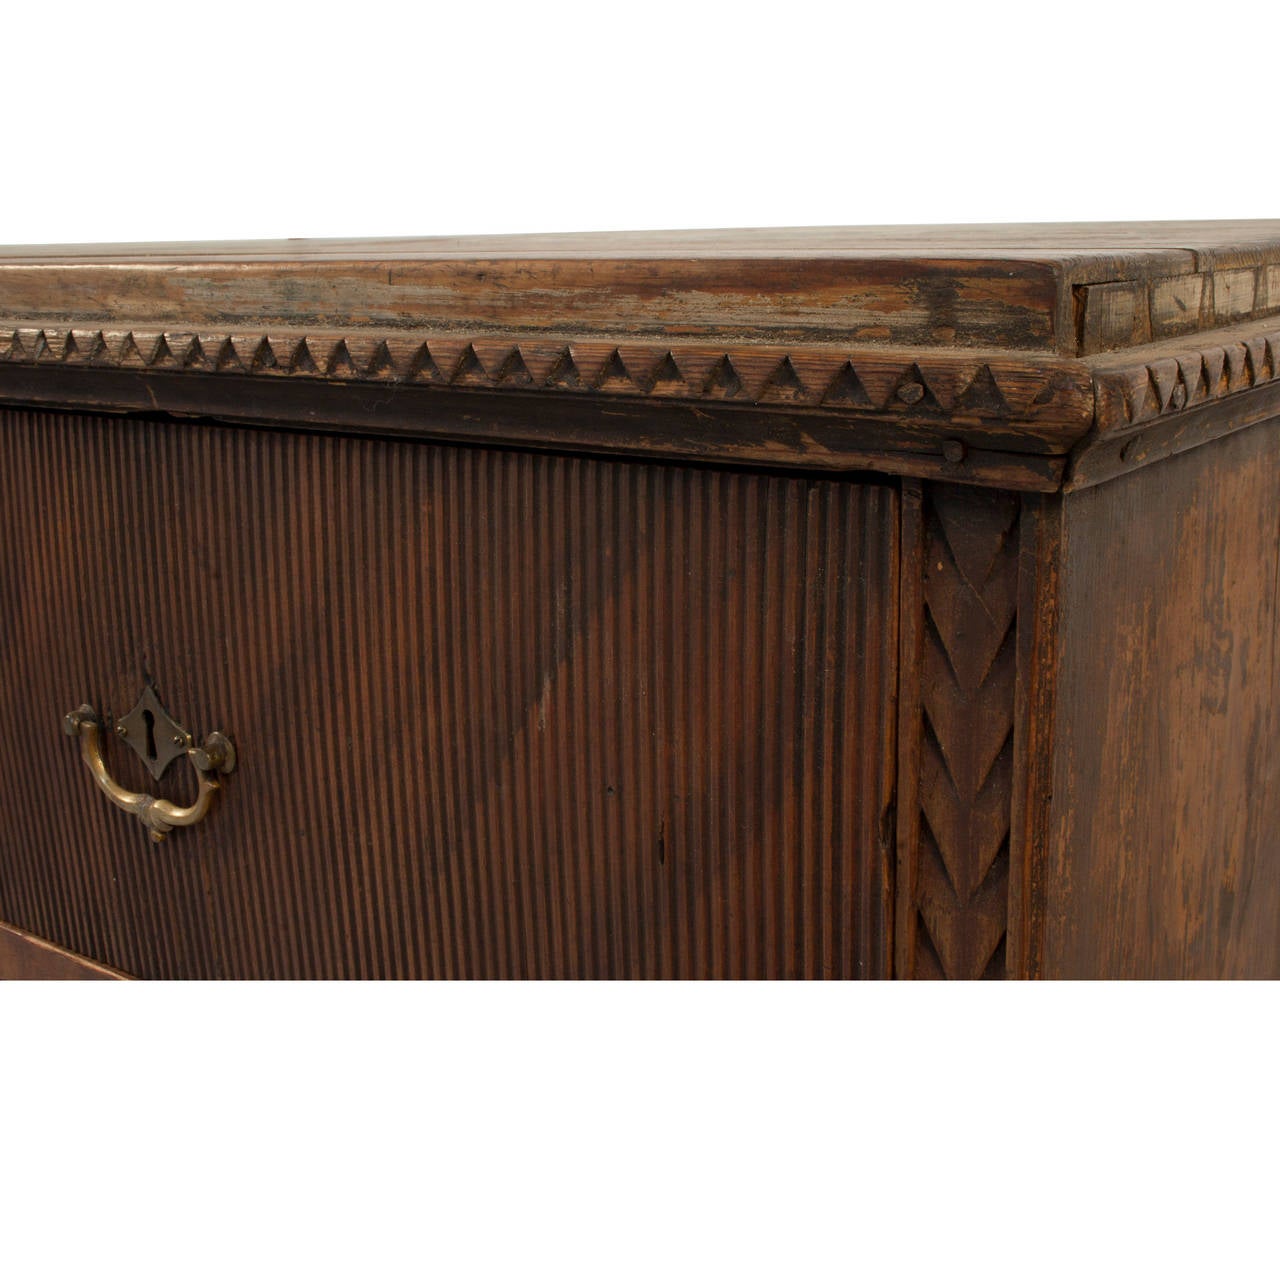 Four-drawer Gustavian chest in a worn marbleized patina.